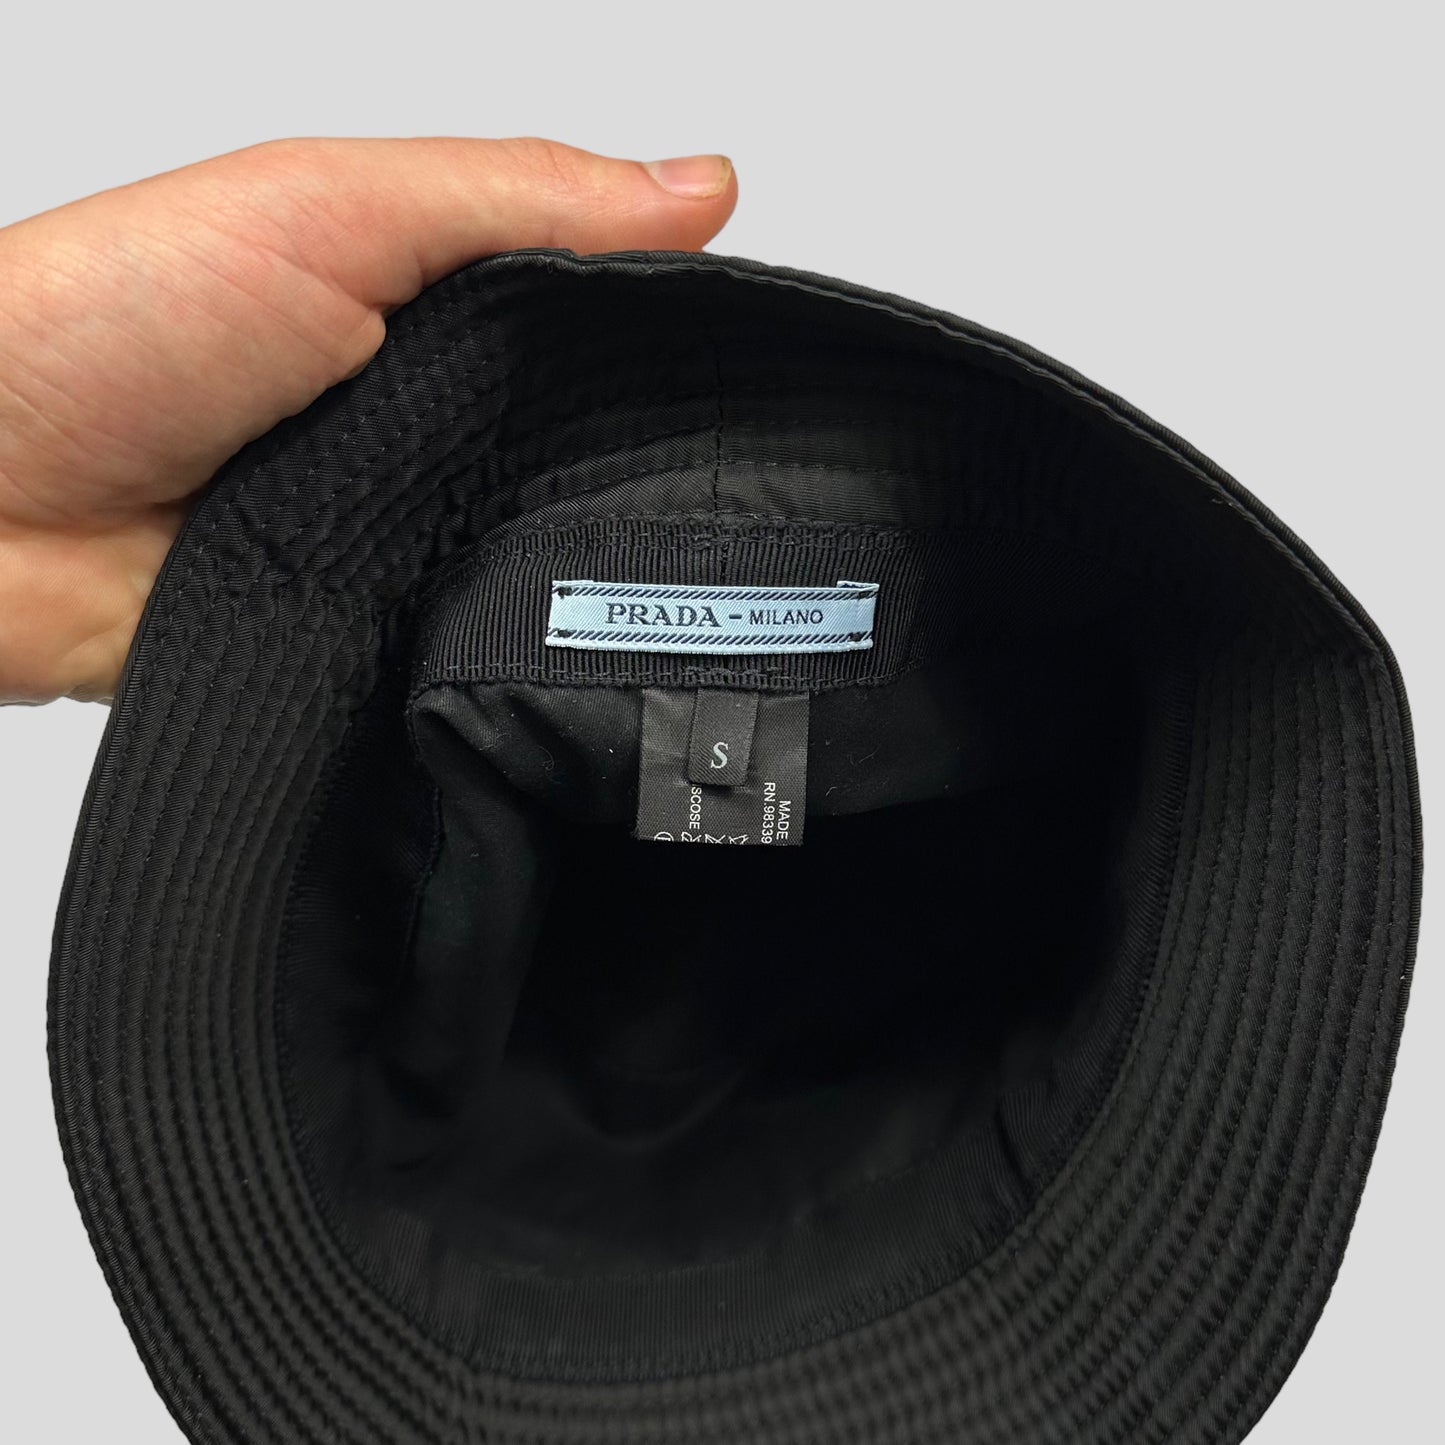 Prada Milano 2018 Nylon Bucket Hat + Dustbag - S